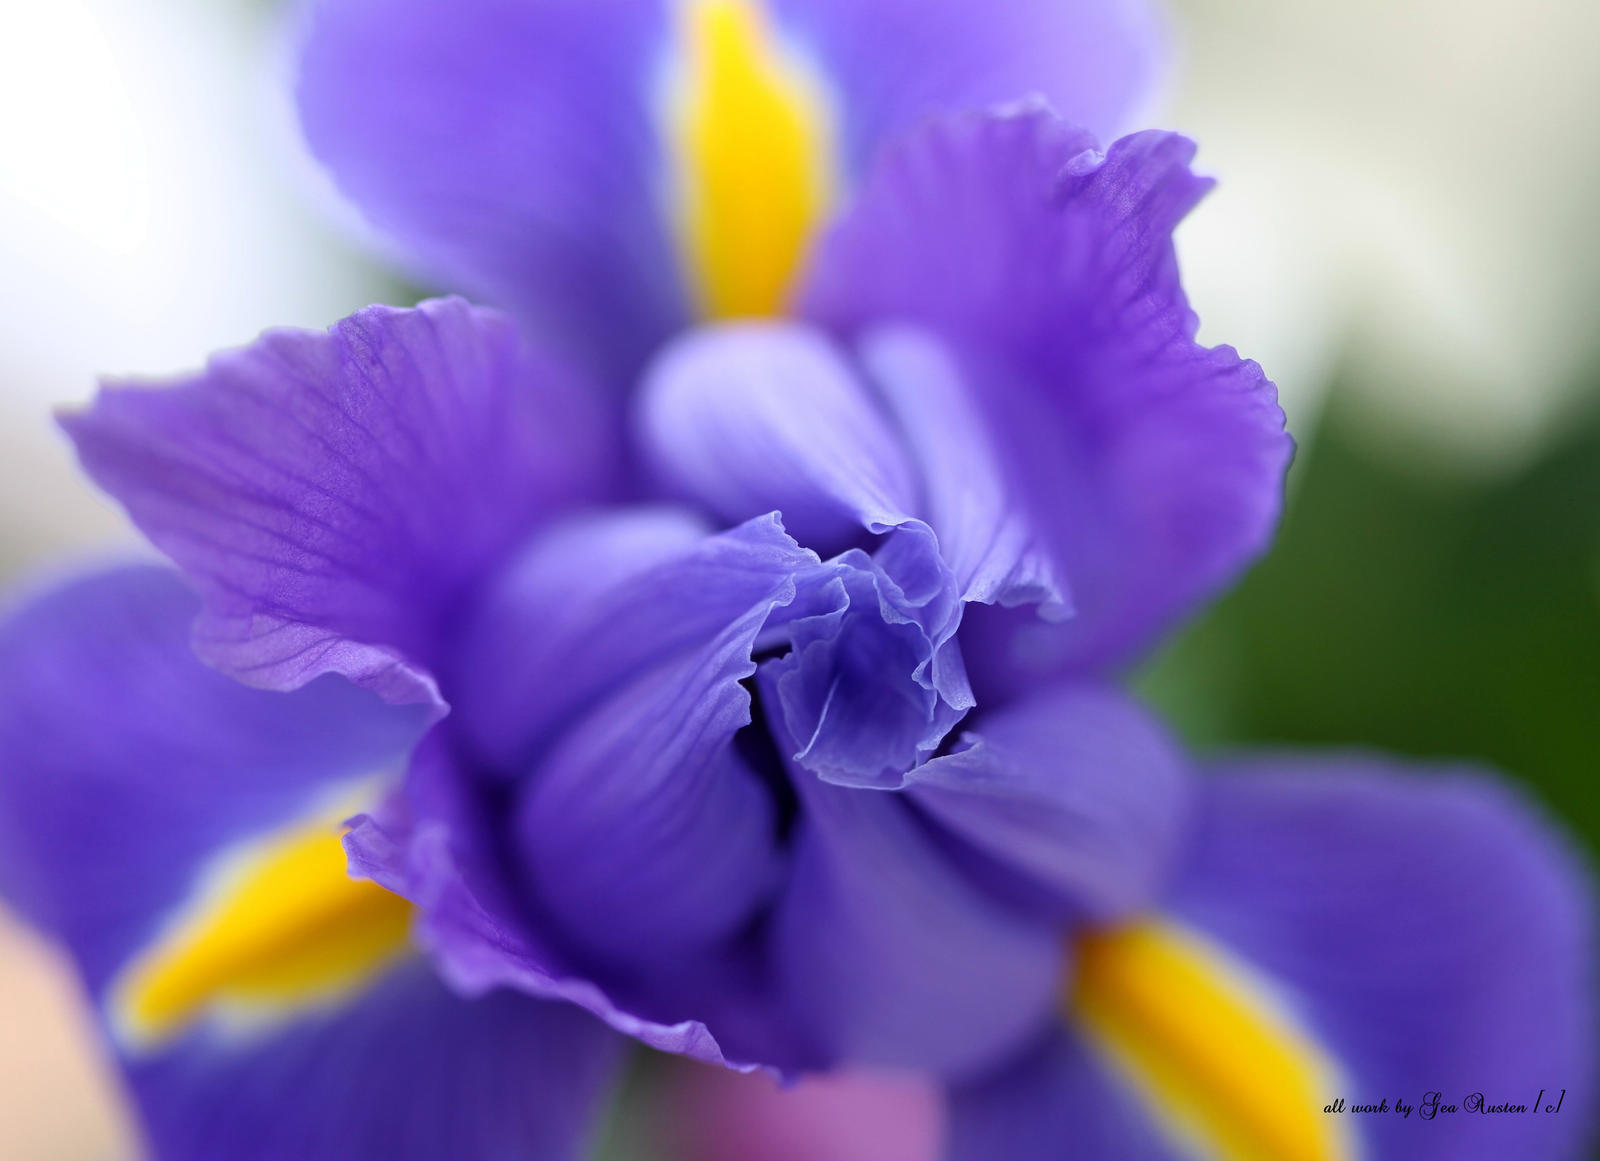 Furled Iris by GeaAusten on DeviantArt